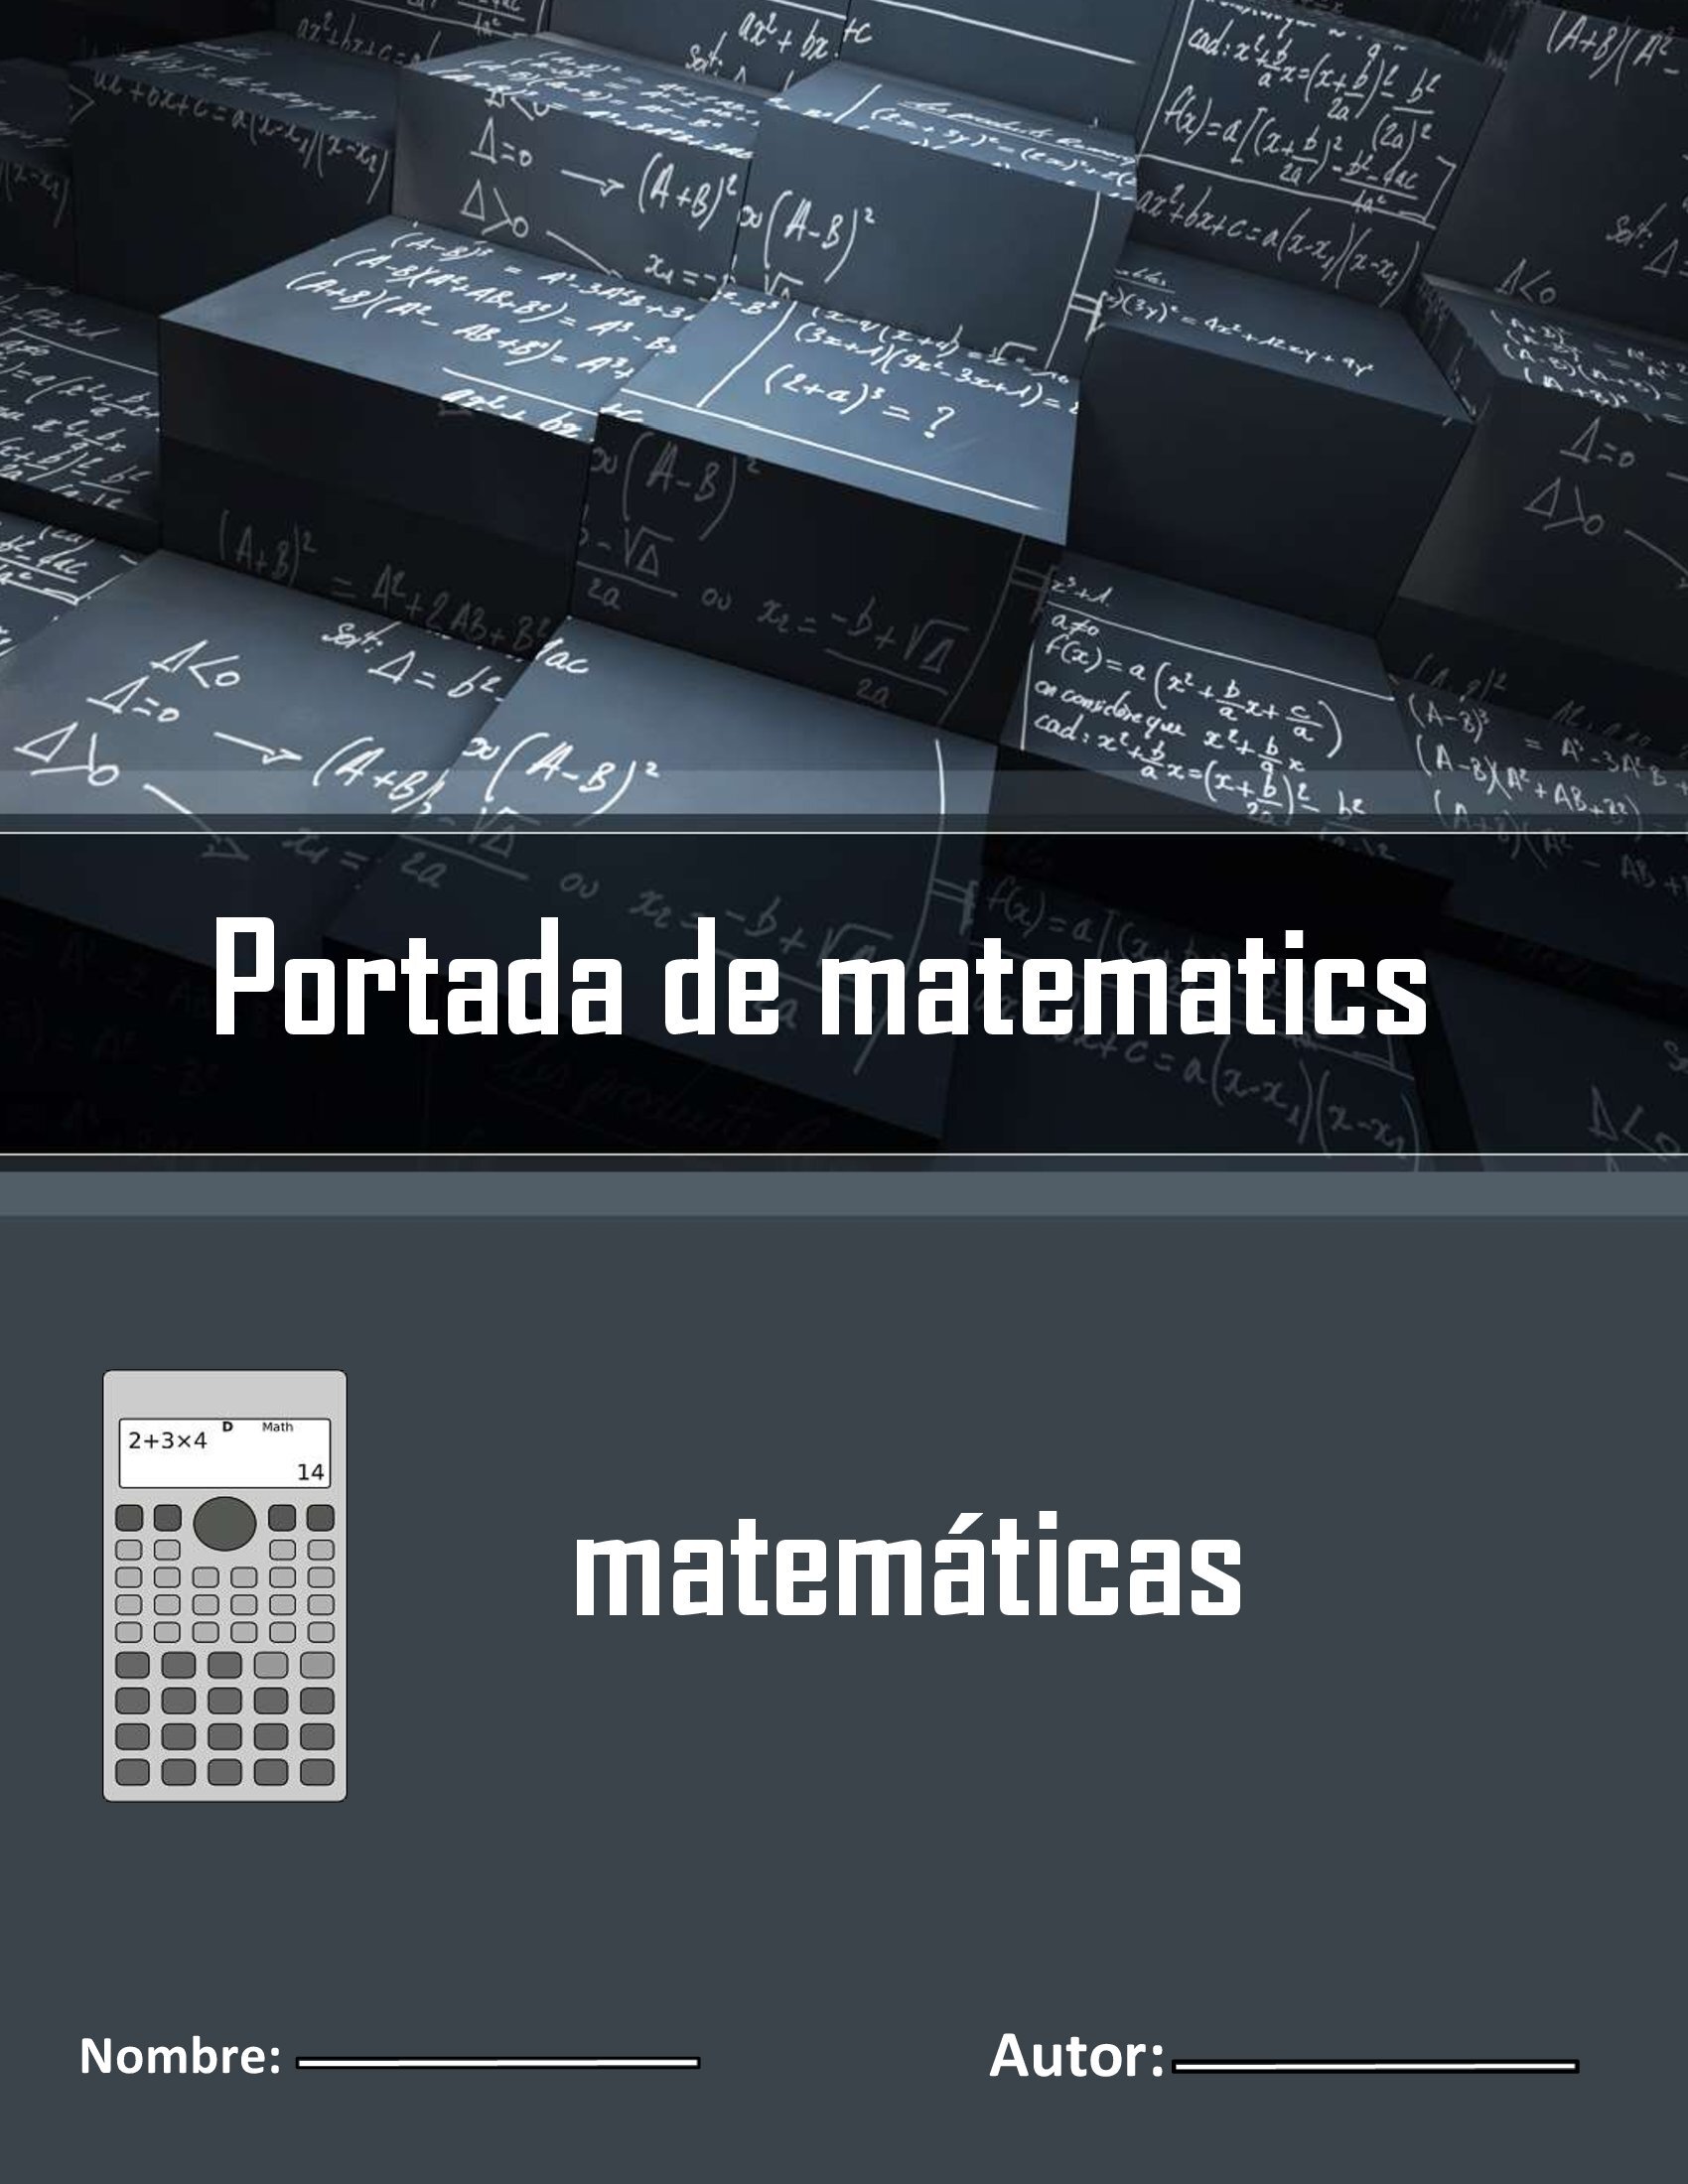 Portada calculadora - matematicas